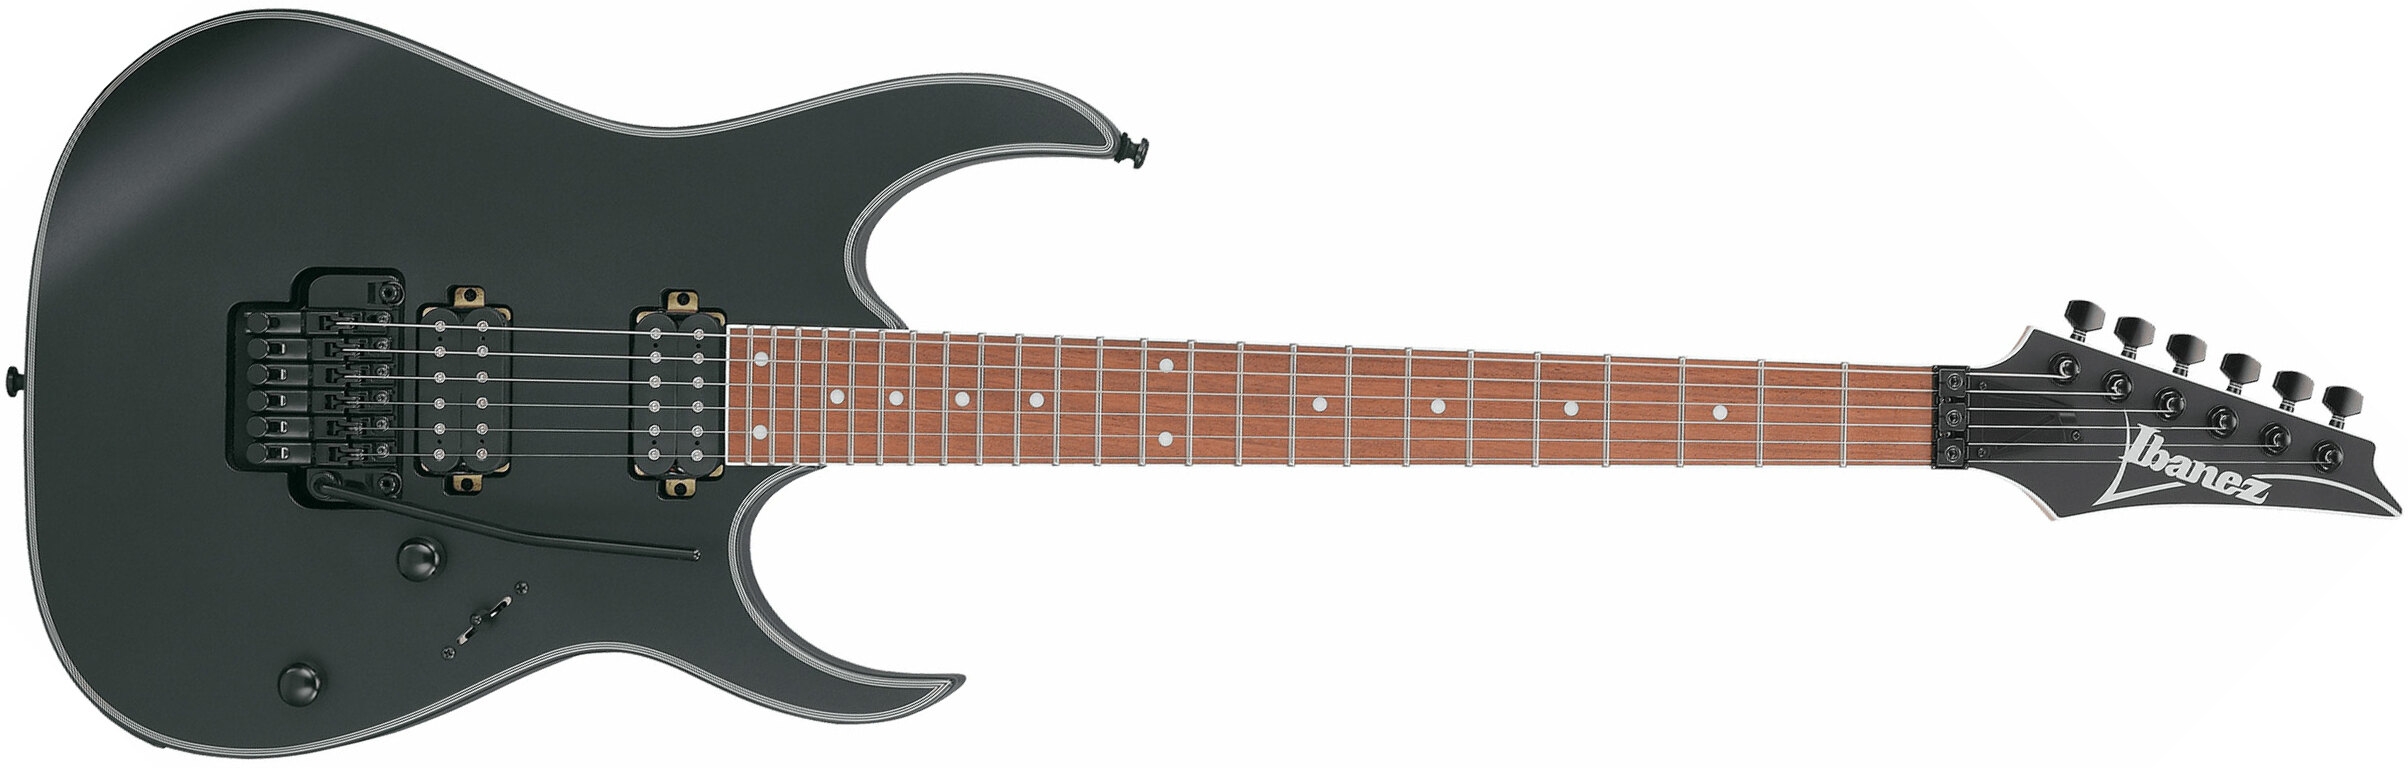 Ibanez Rg420ex Bkf Standard 2h Fr Jat - Black Flat - Guitare Électrique Forme Str - Main picture